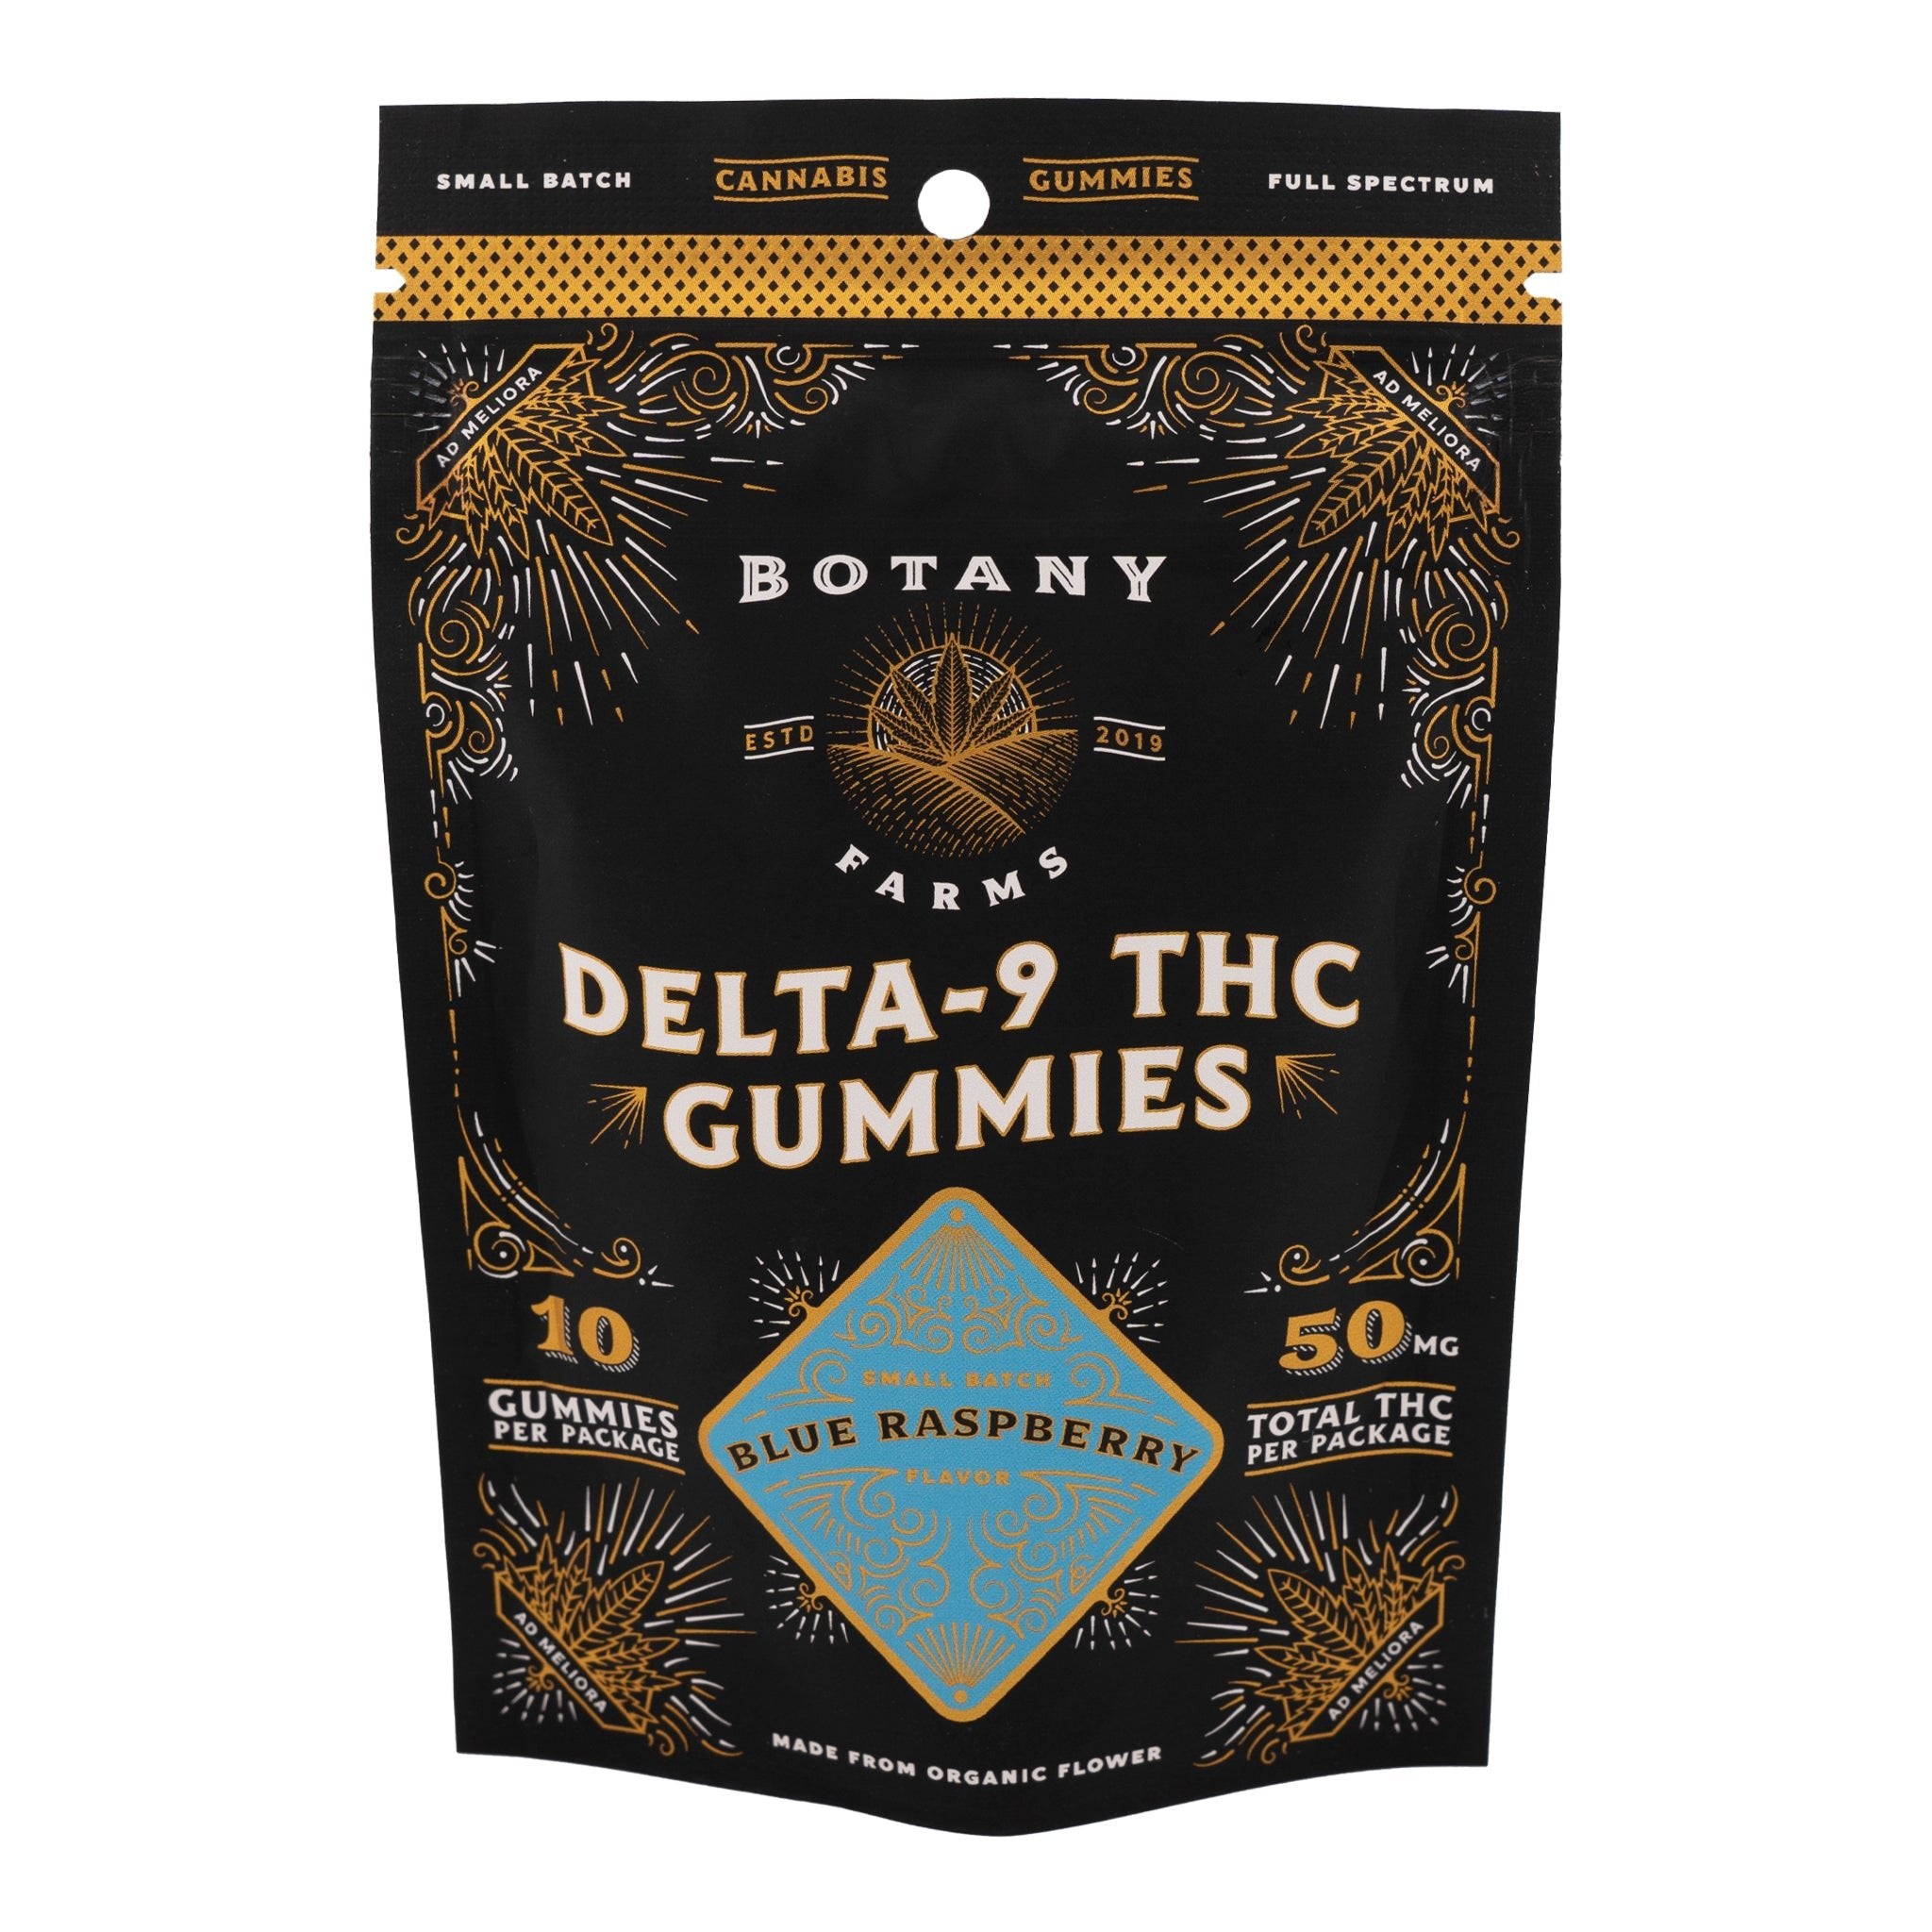 BOTANY FARMS Delta-9 THC Gummies 50mg THC (6 Flavors)